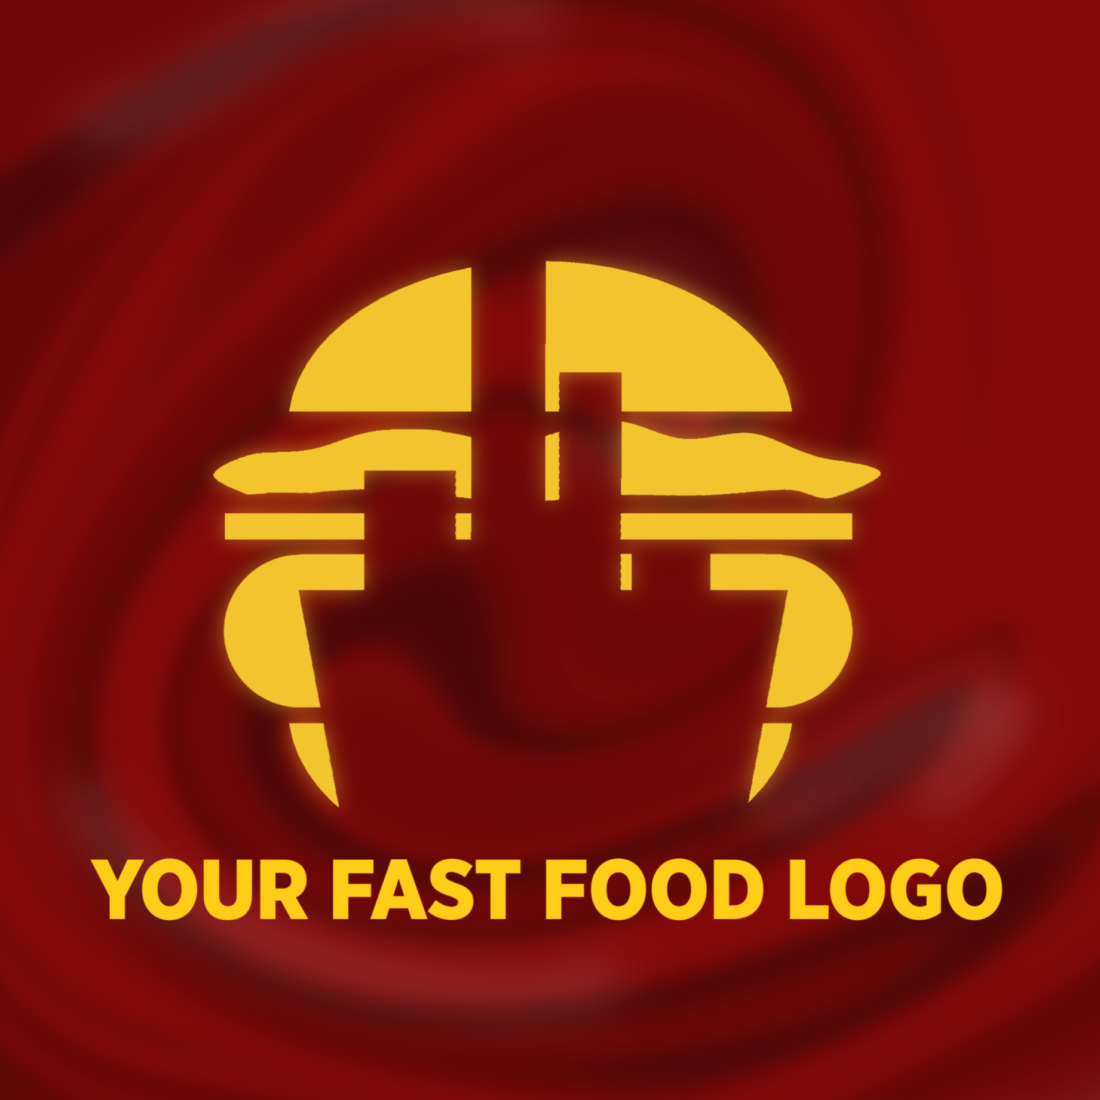 Burger logo cover image.